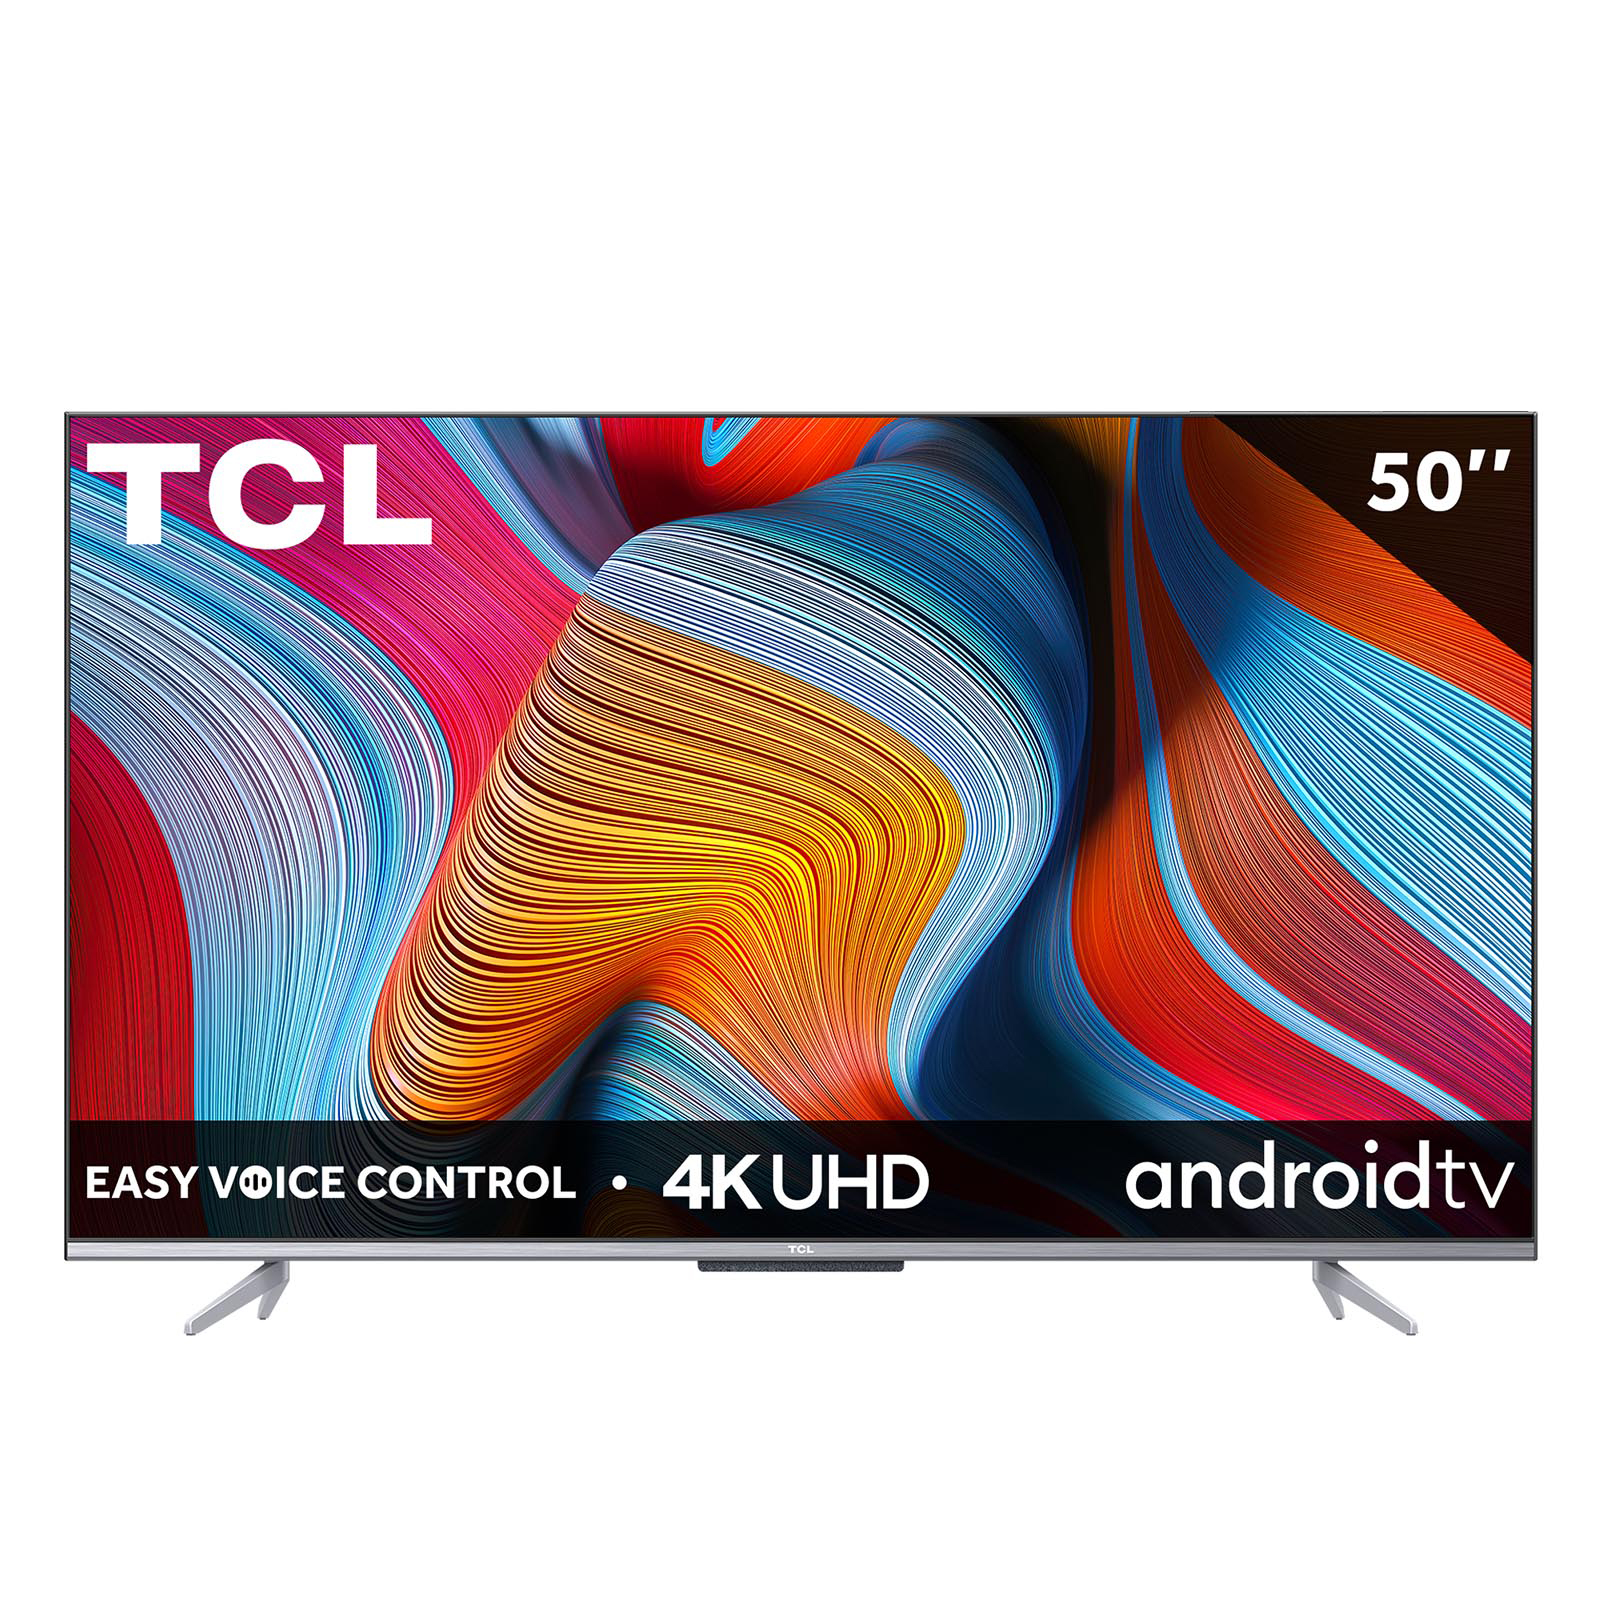 Pantalla TCL 50" Android Smart TV 4K UHD con Google Assistant 50A547